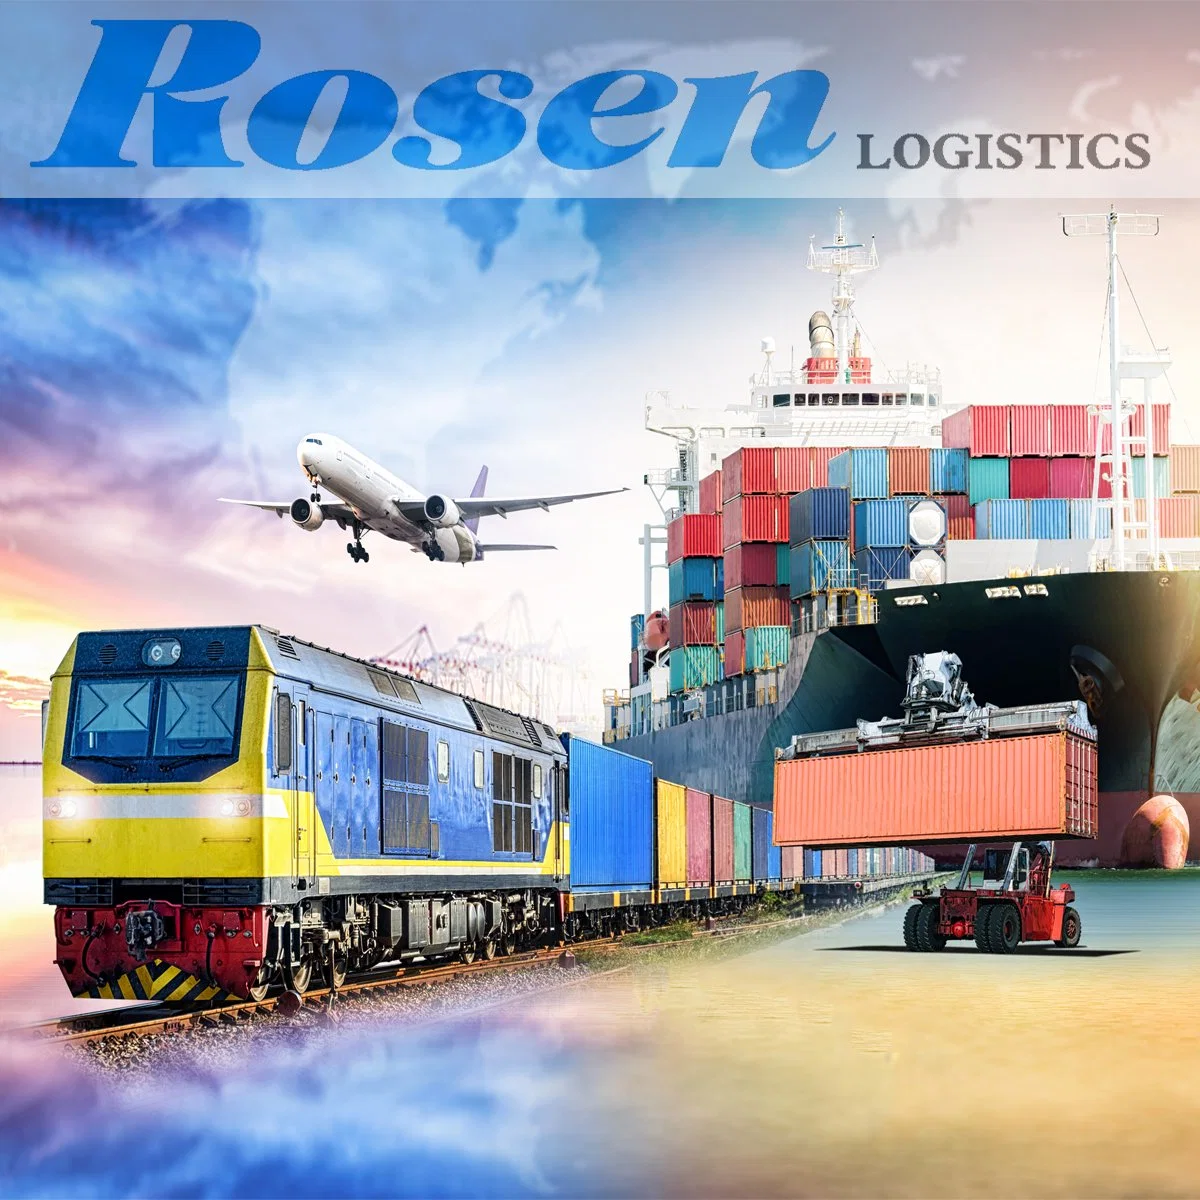 International Logistics and Transportation to Namibia Tanzania Shipping Agent